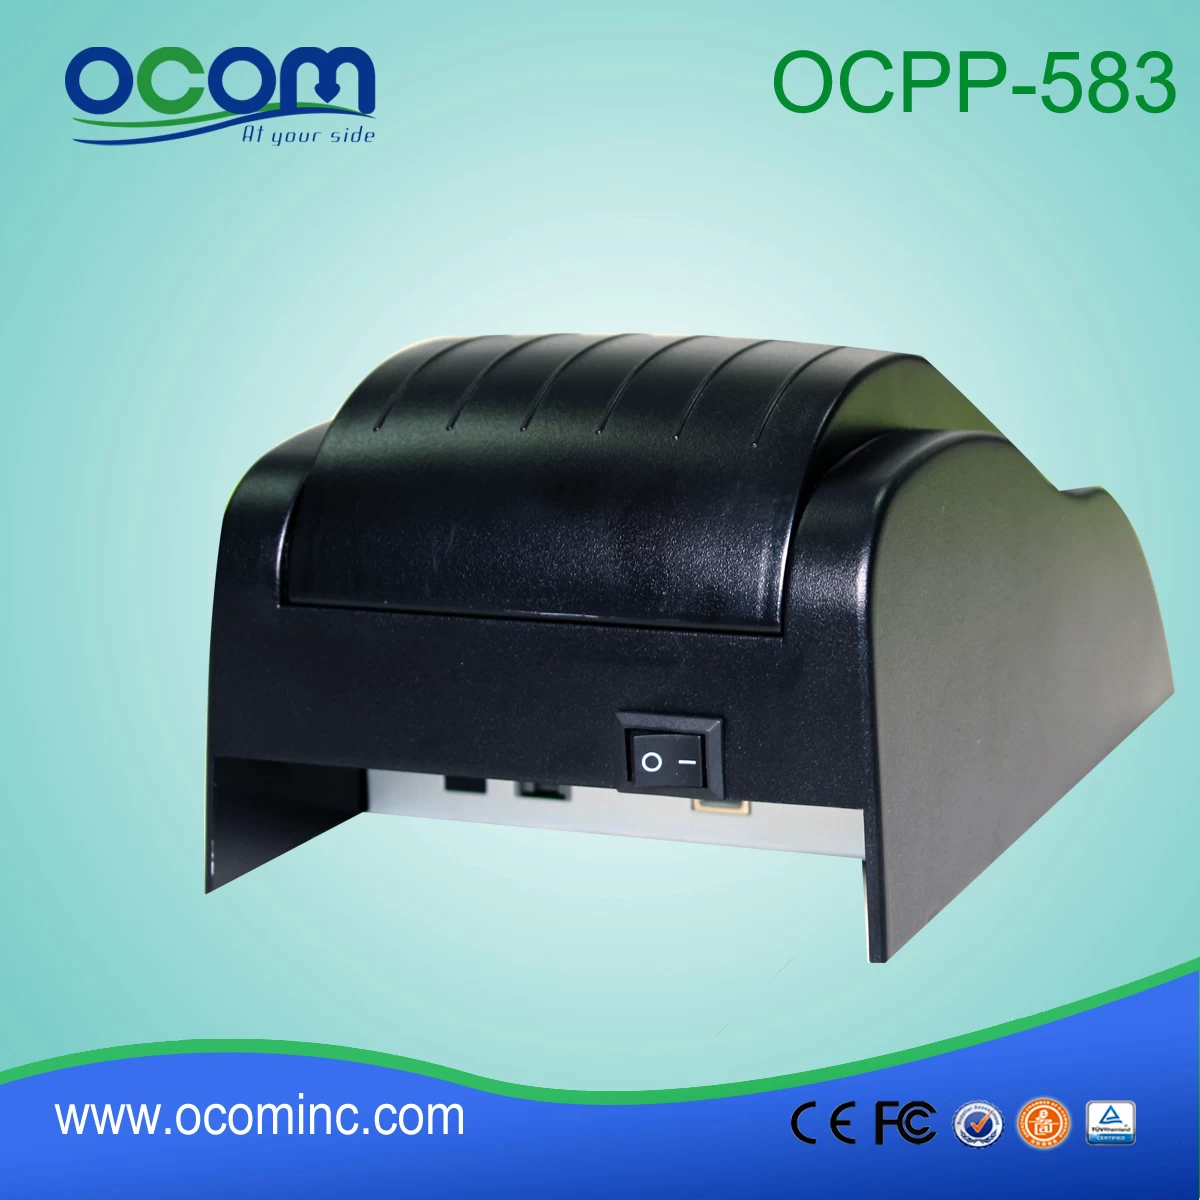 China hot supply 58mm thermal receipt printer, thermal pos printer